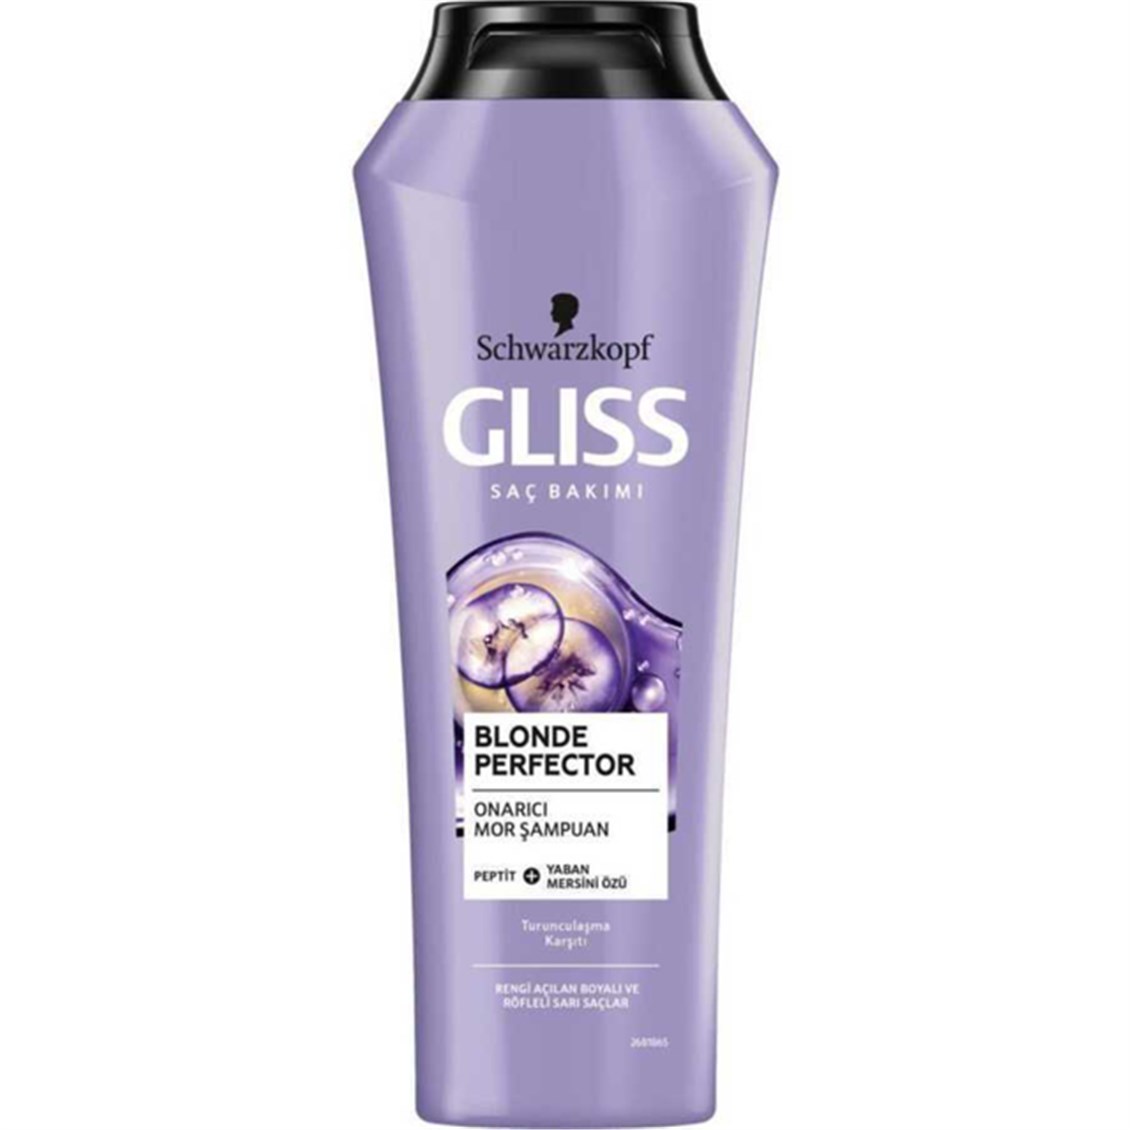 Gliss Schwarzkopf Blonde Perfector Turunculaşma Karşıtı Mor Şampuan 250 ml  - Onur Market